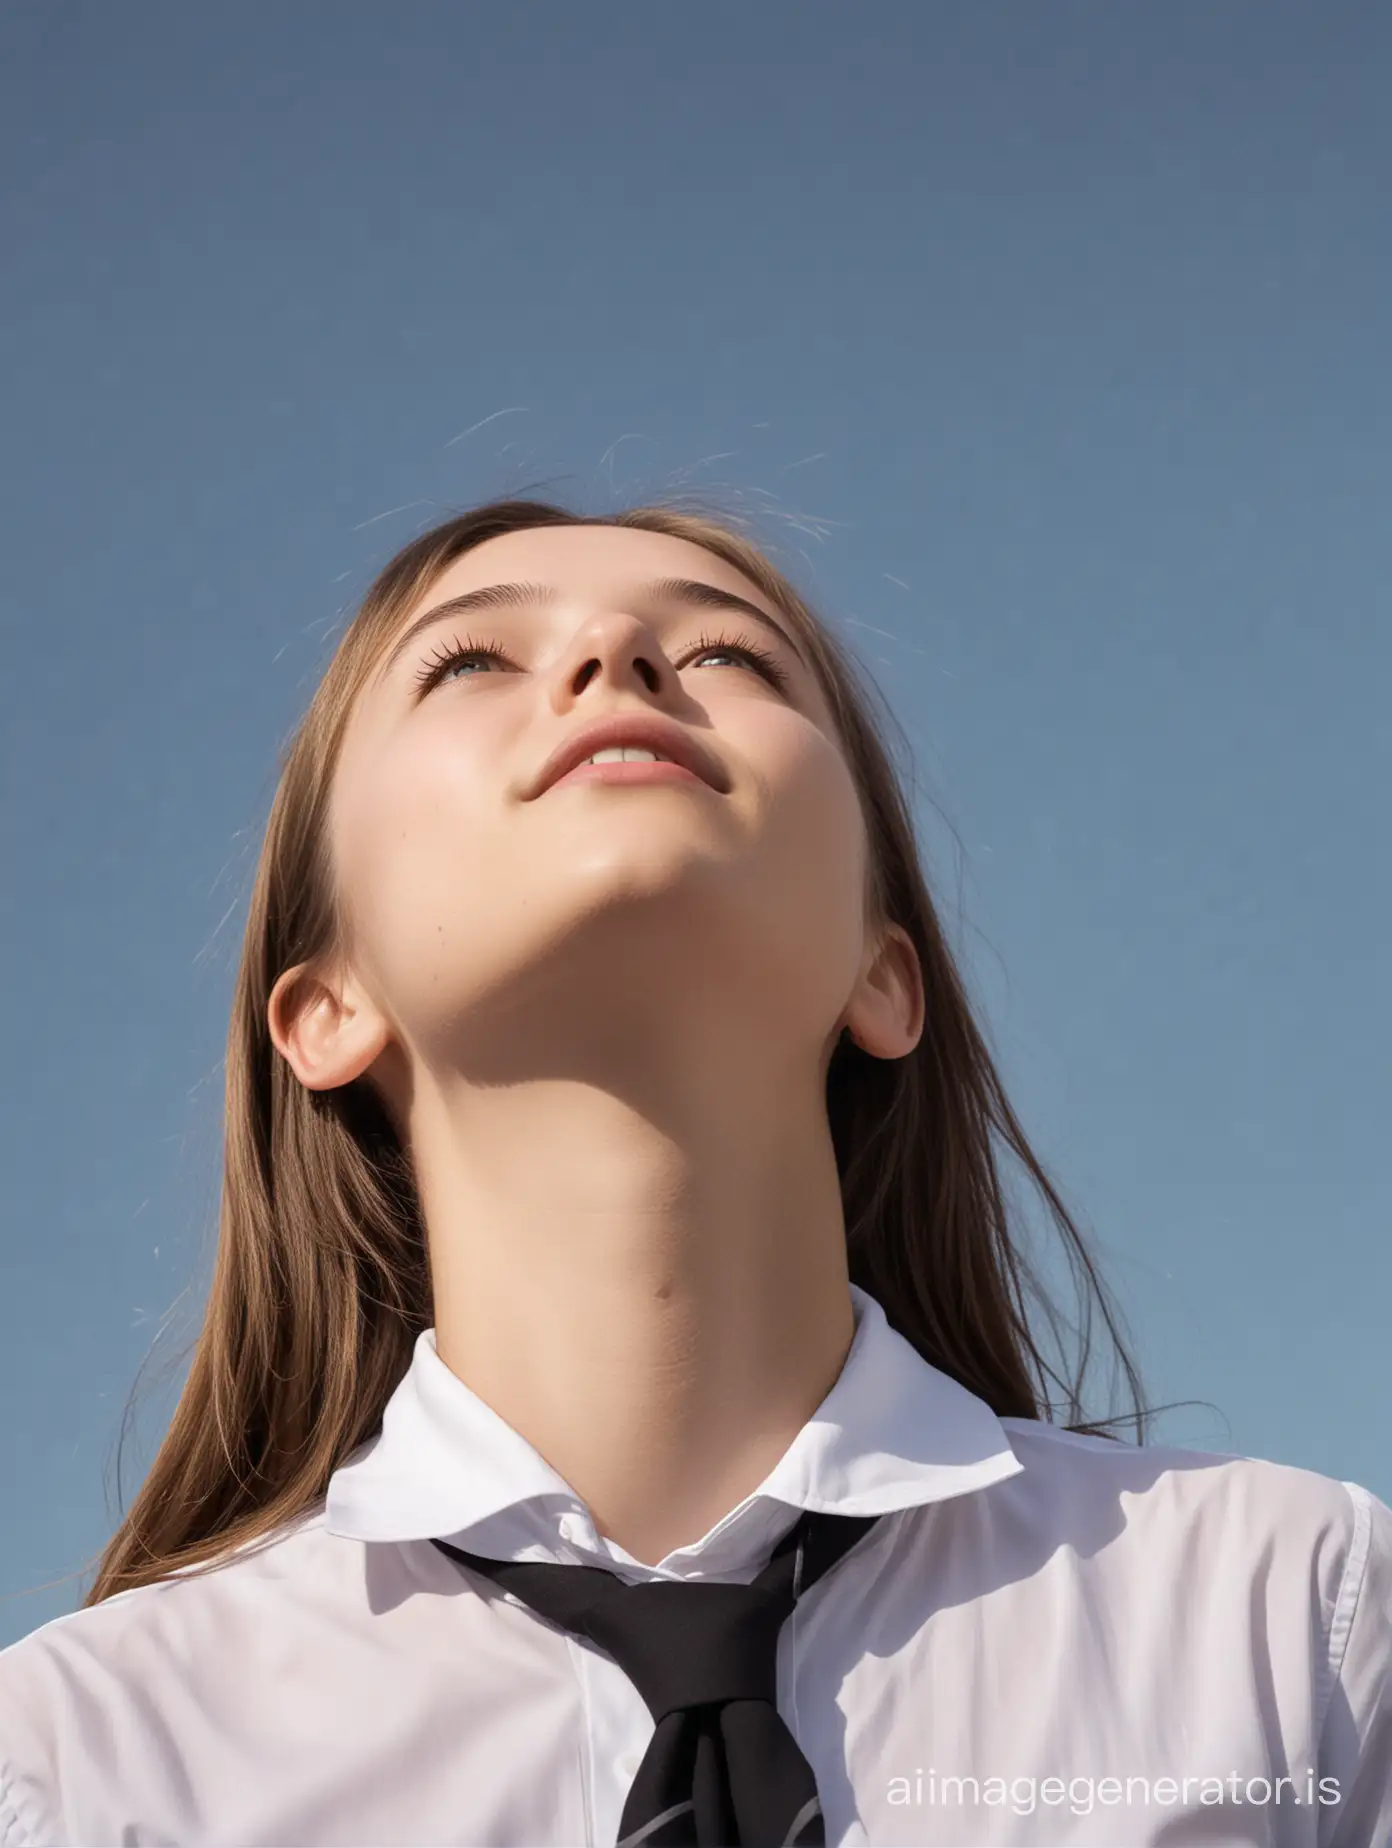 16YearOld-Teenage-Girl-in-School-Uniform-Looking-Up-to-the-Sky-in-Heaven-CloseUp